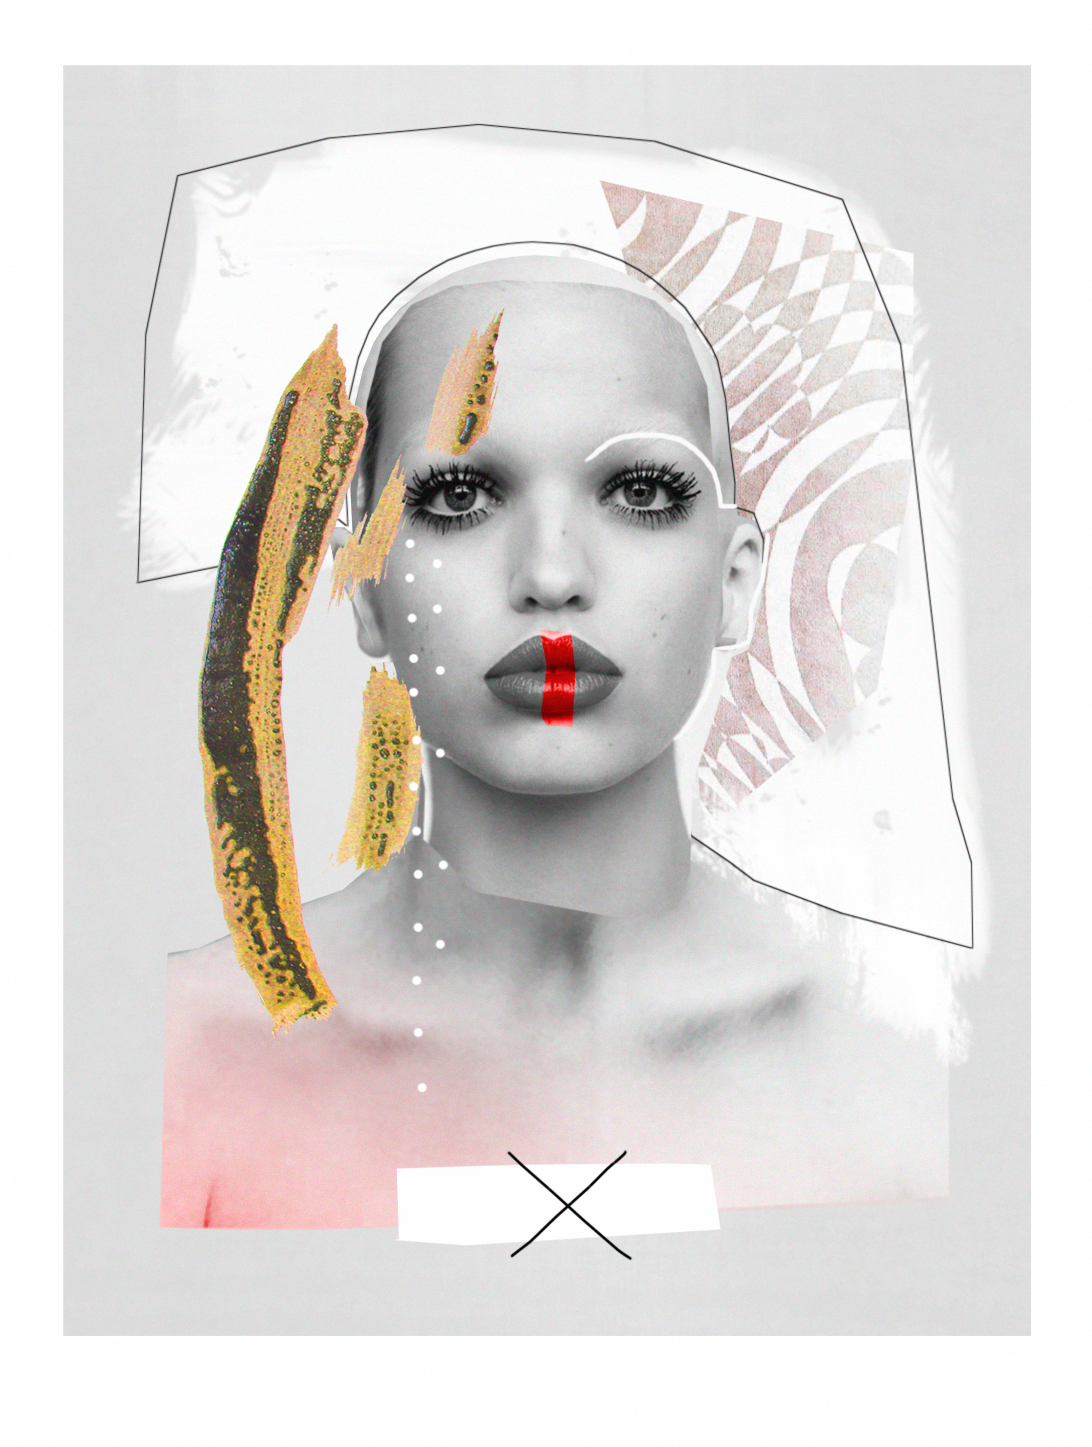 mixed media Prince Lauder collage beauty fashion illustration art lauder